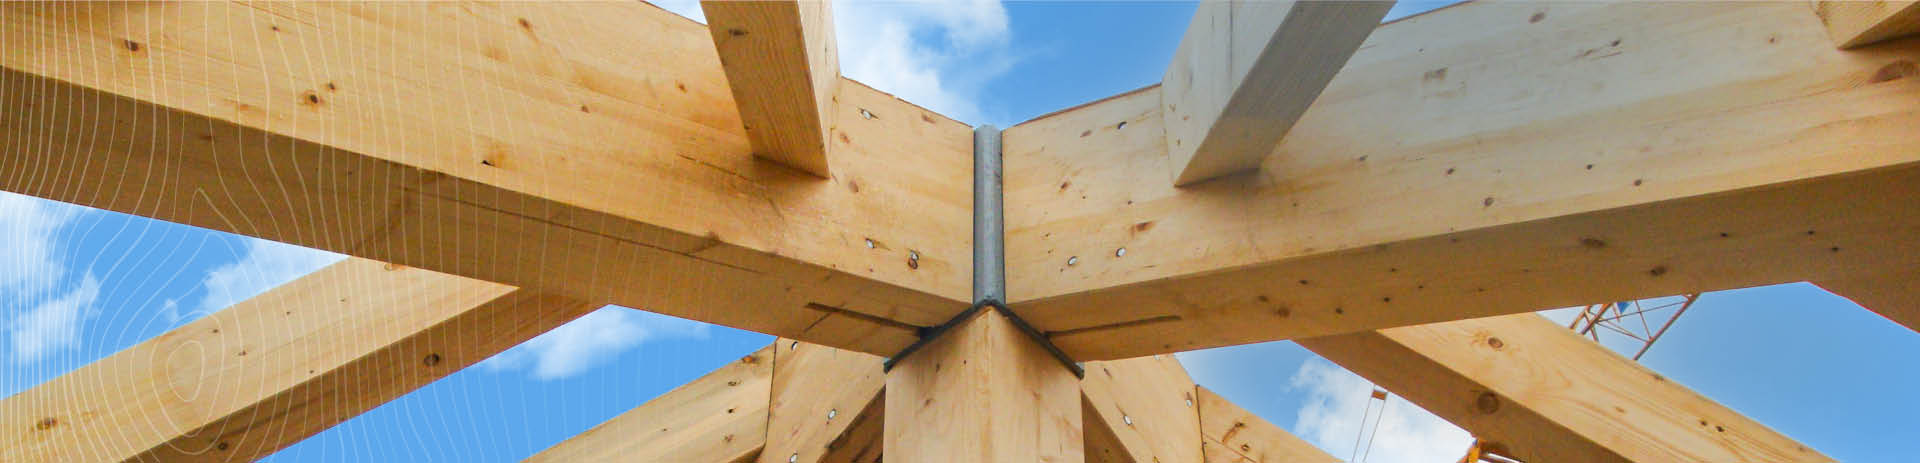 Kontakt zu Schmickler Holzbau hochwertige Holzkonstruktionen